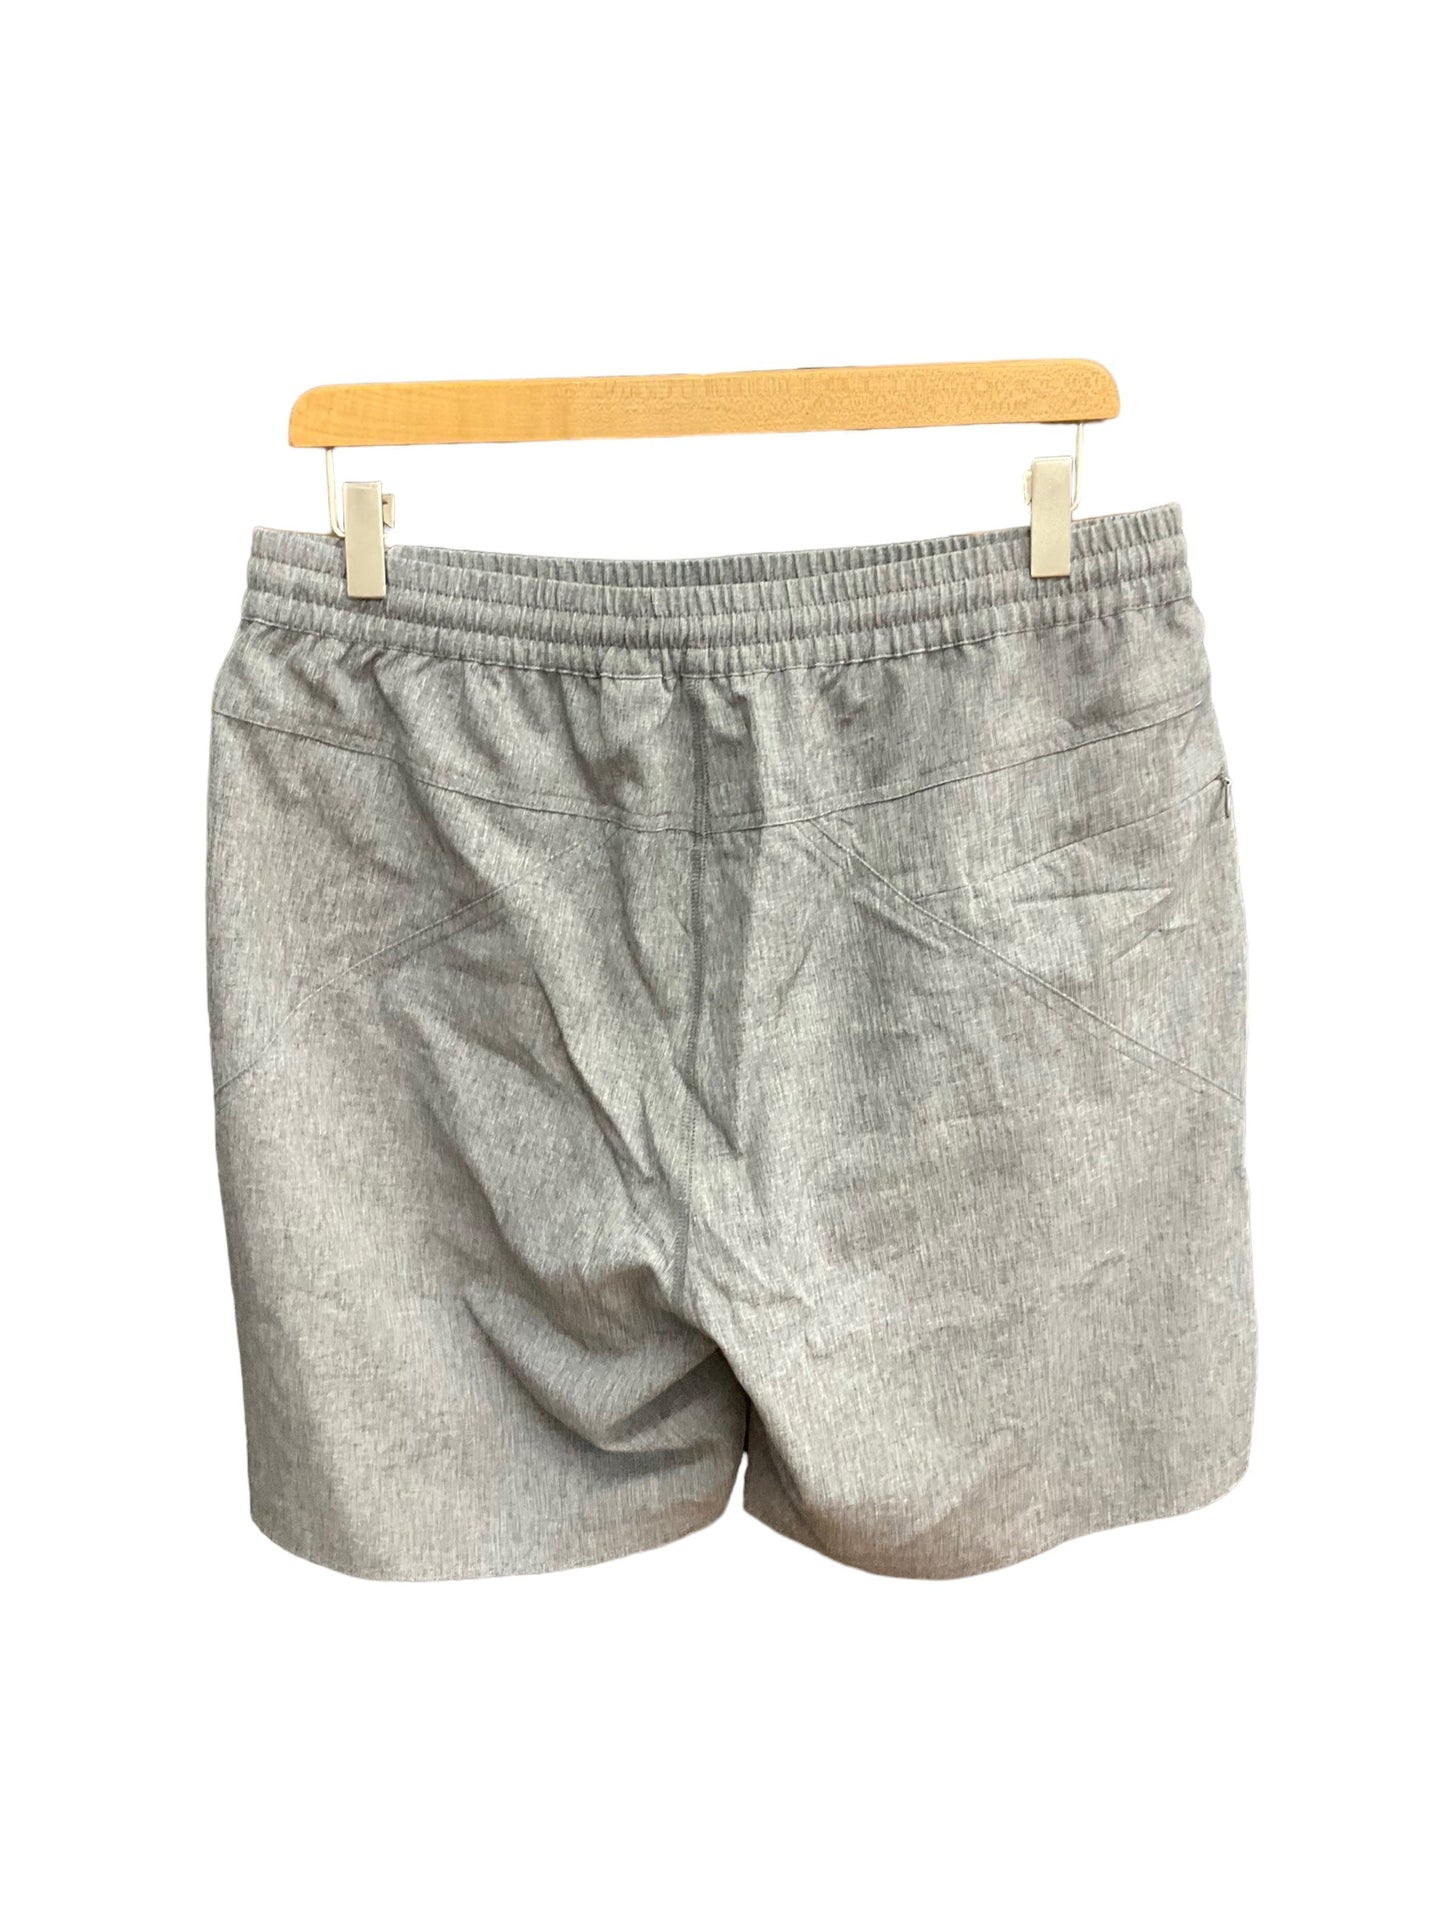 Grey Athletic Shorts Weatherproof, Size L